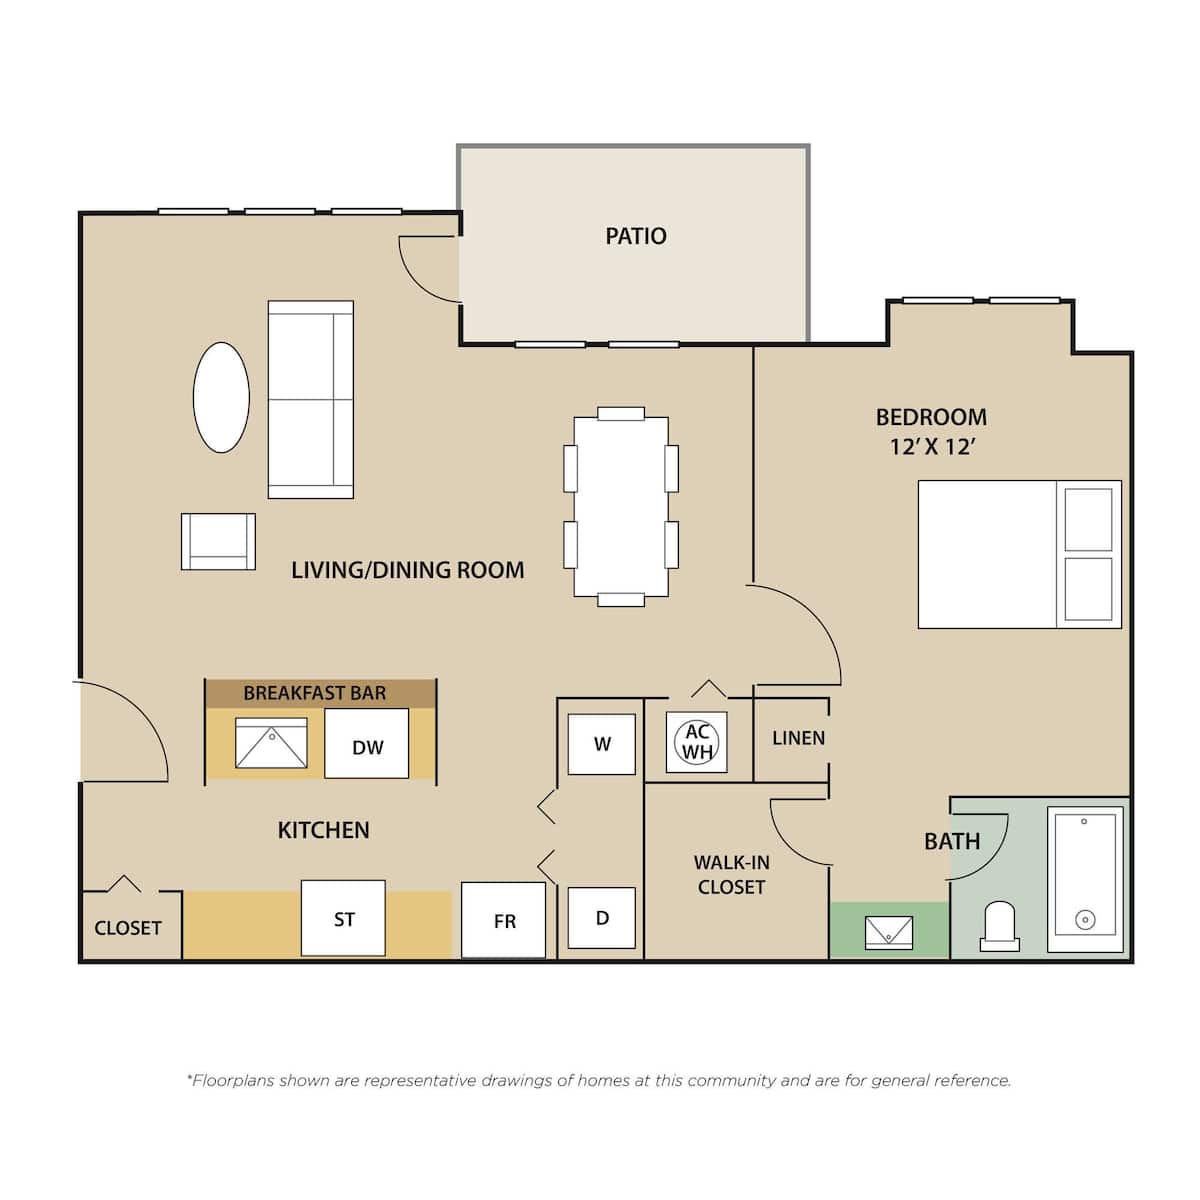 Floorplan diagram for Madison, showing 1 bedroom